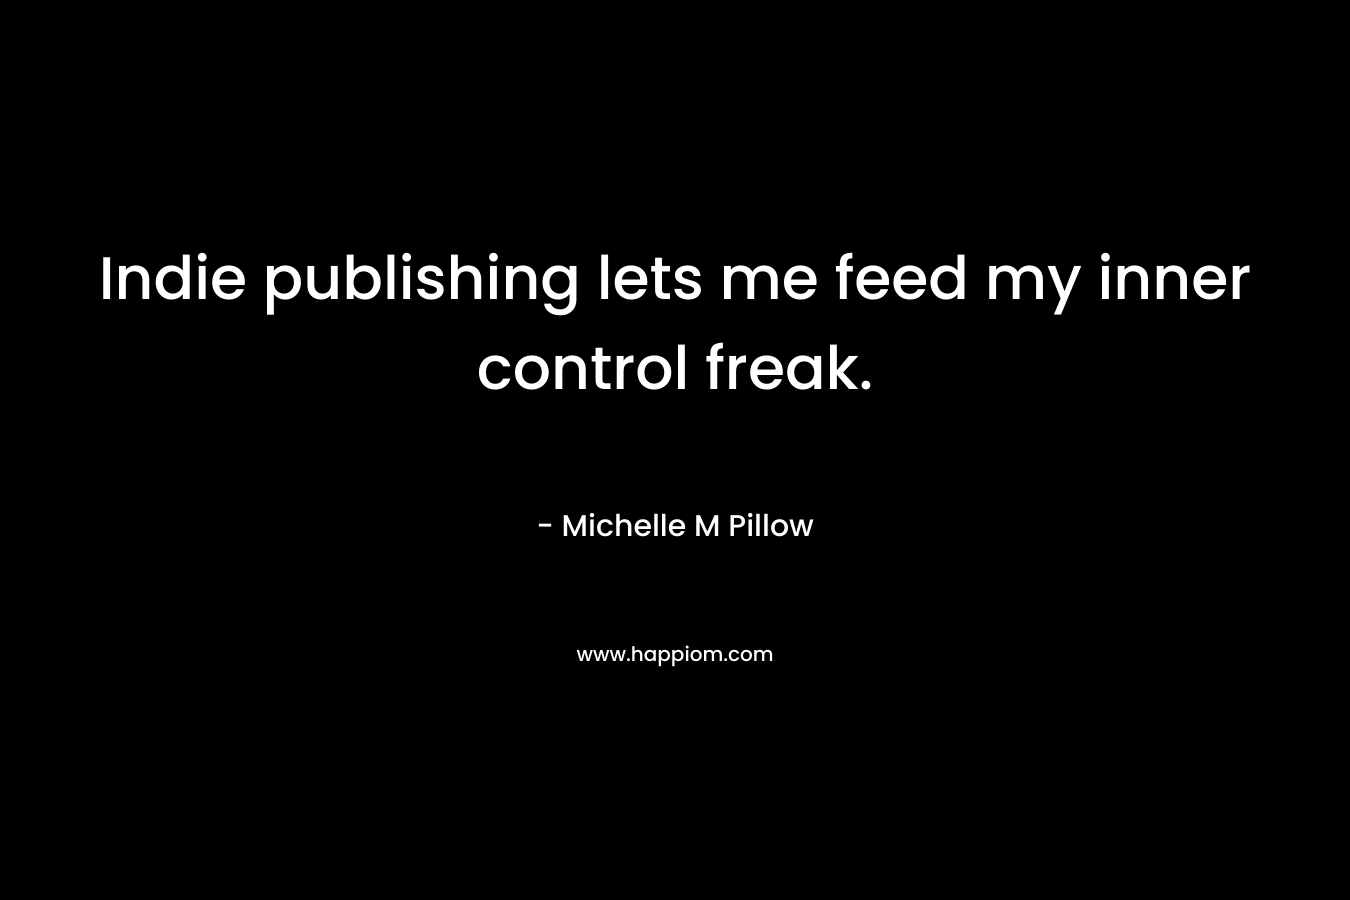 Indie publishing lets me feed my inner control freak.